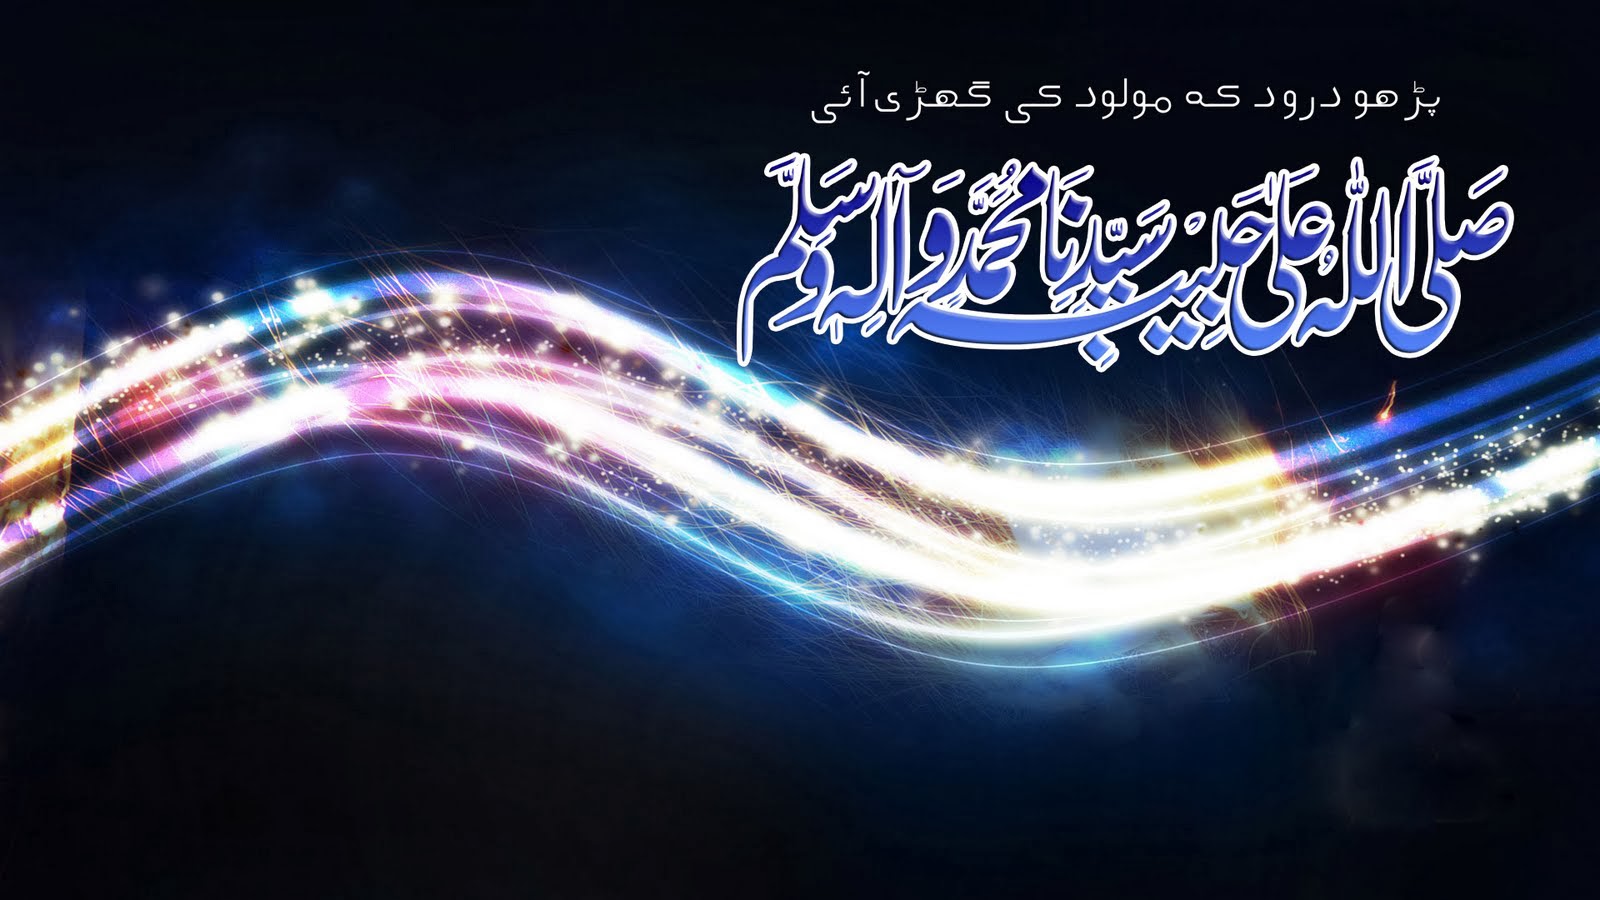 Eid Milad Un Nabi 2014 Wallpapers HD Free download ...